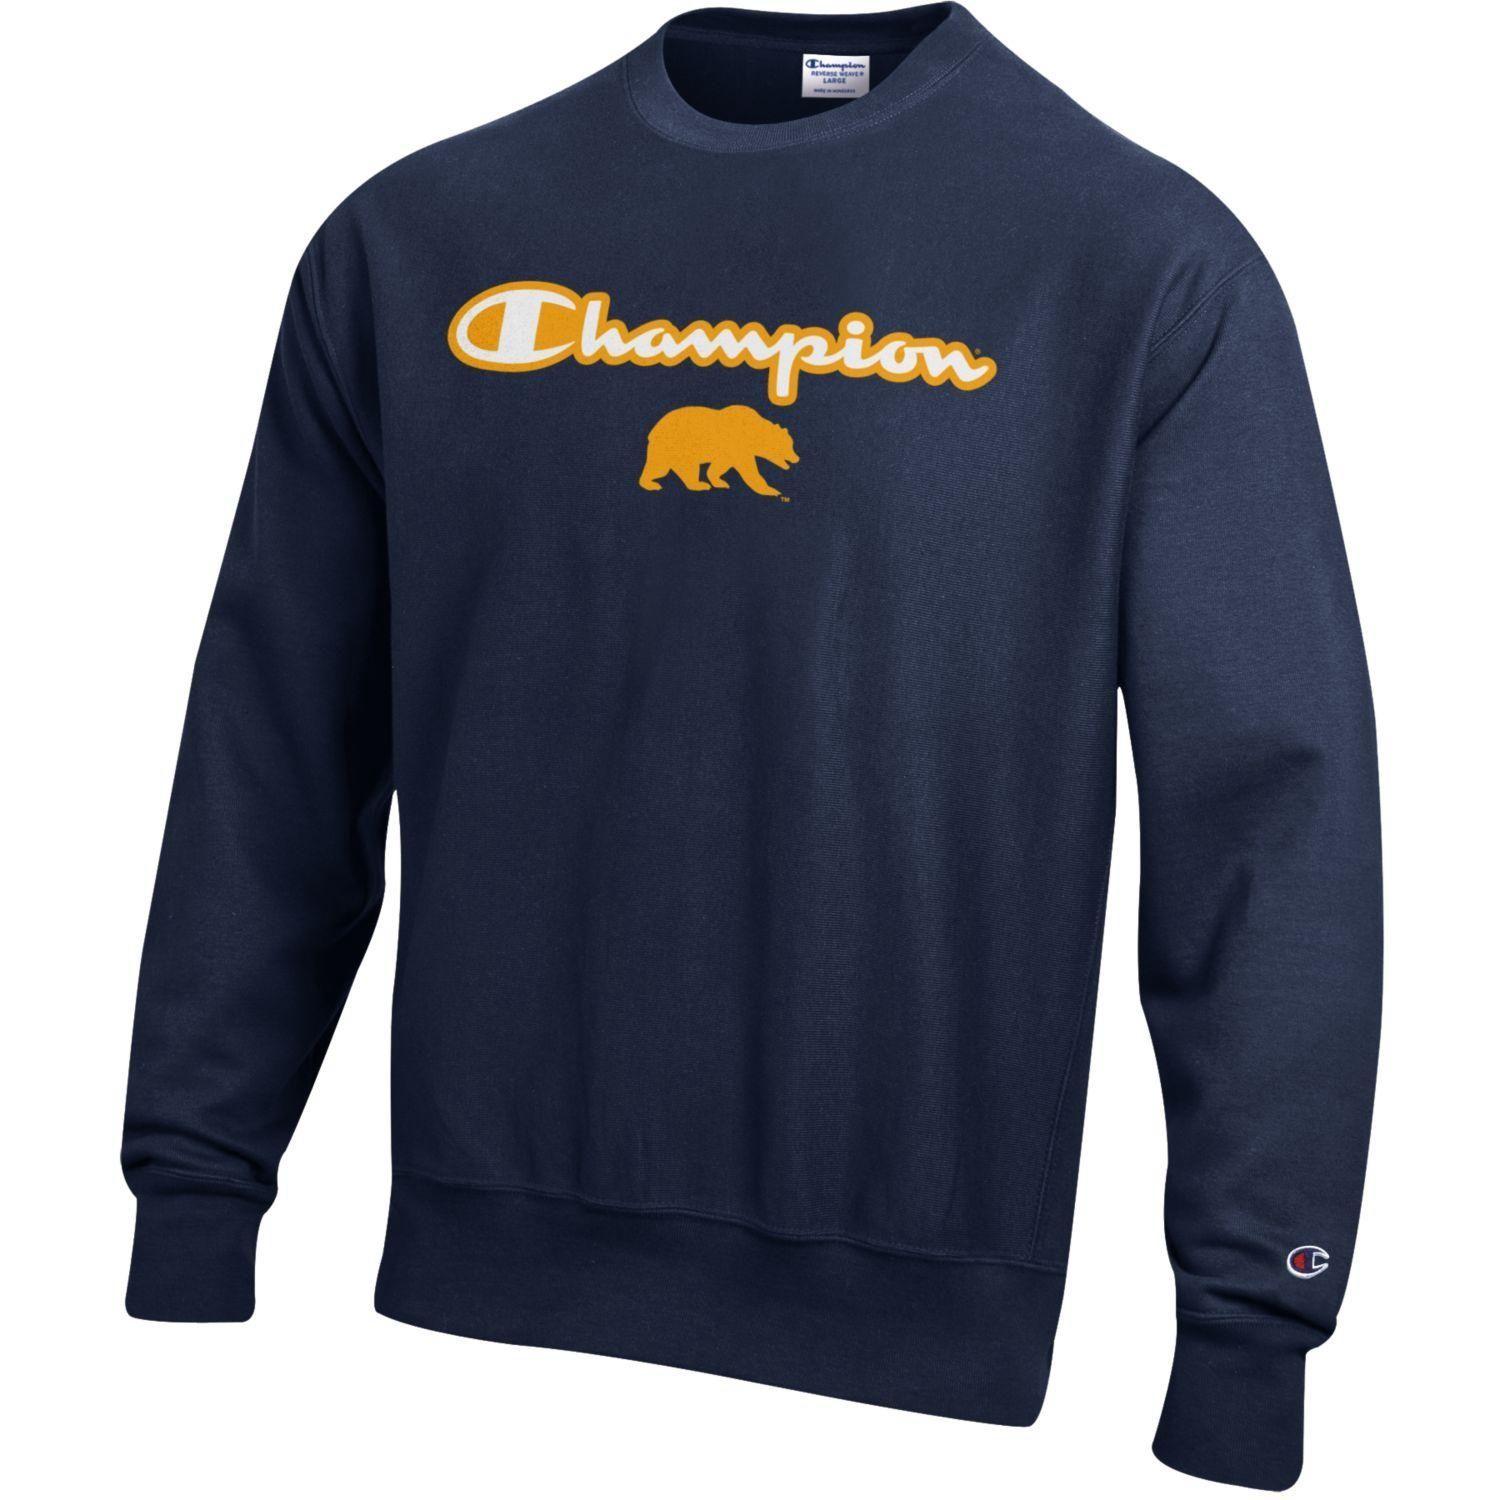 Champion Store Logo - Cal Student Store: Cal Bears Men's Champion Reverse Weave Crew